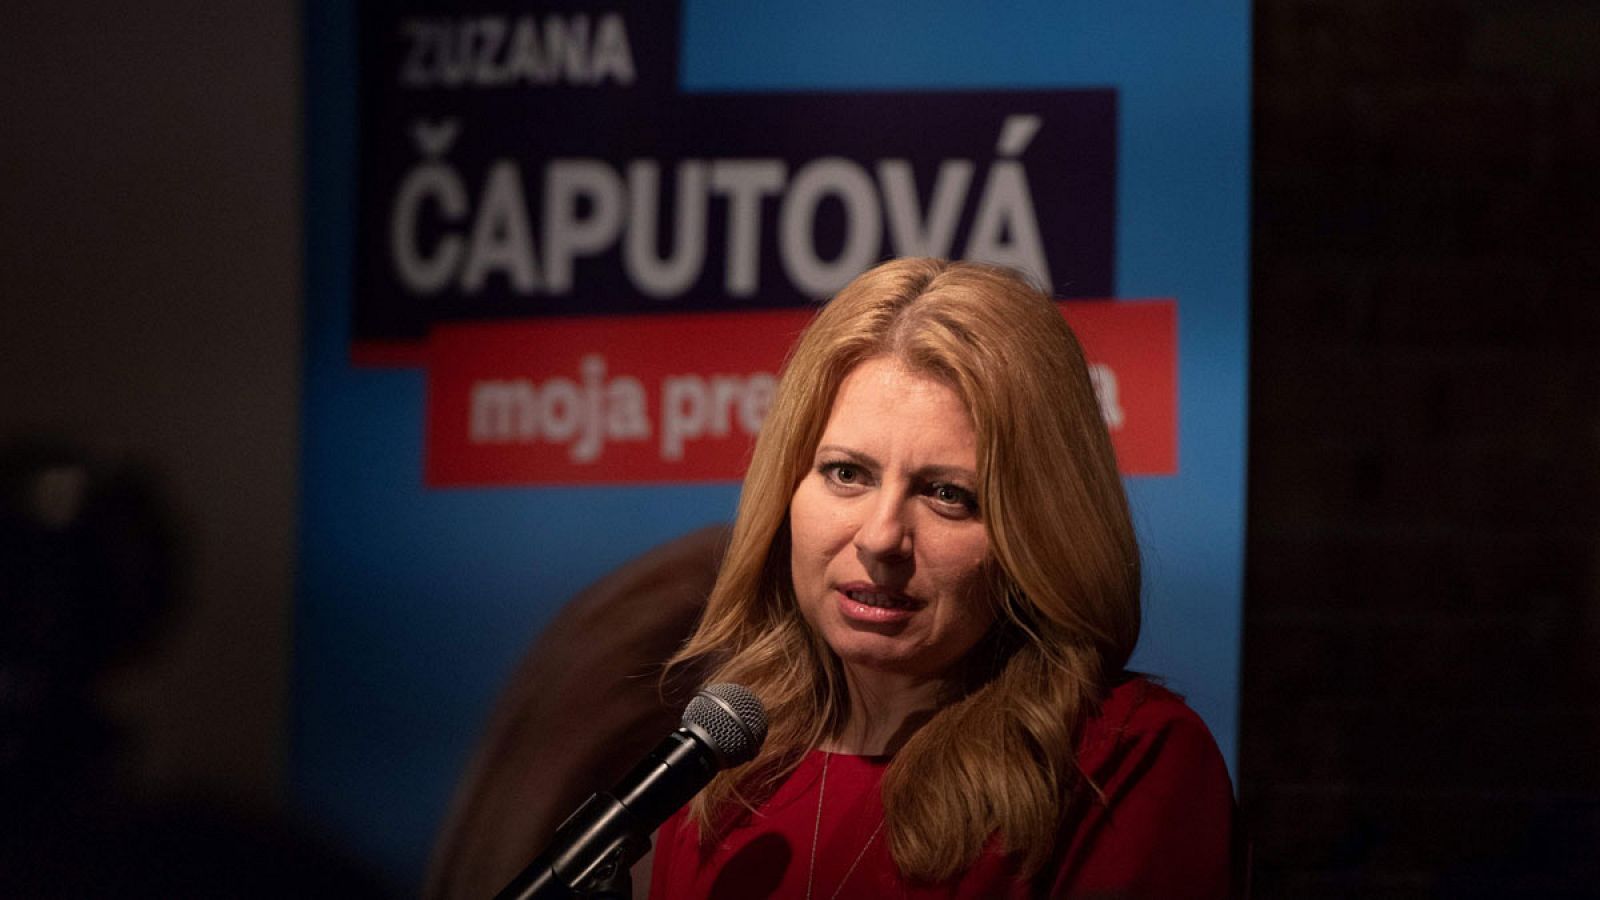 Zuzana Caputova en una imagen del sábado 16 de marzo de 2019 en Bratislava, Eslovaquia.